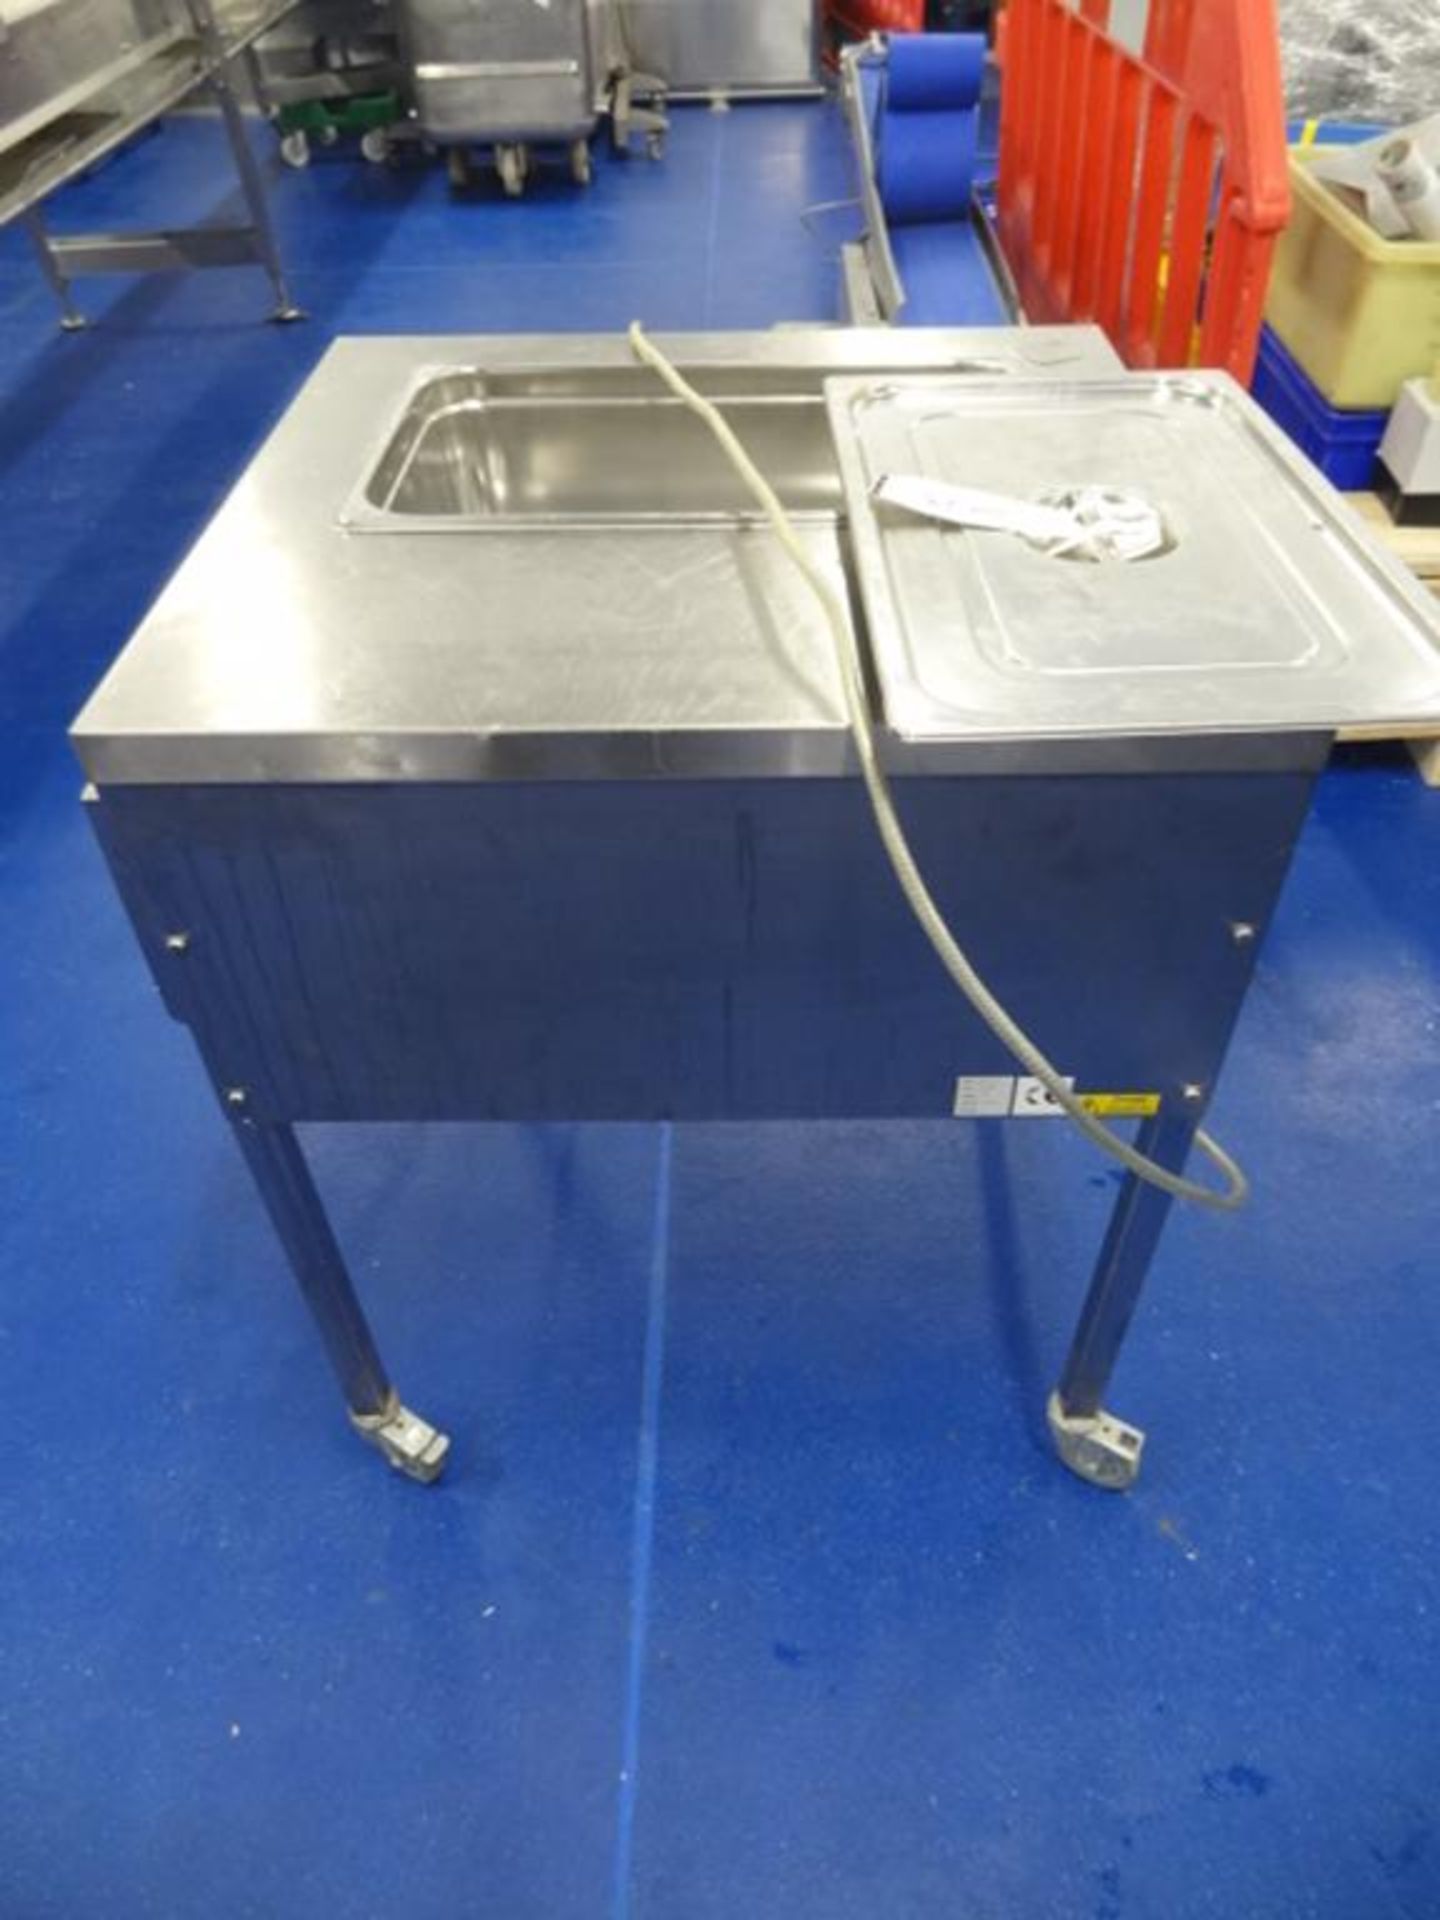 Proven Single Pot water bath Melting unit - Image 4 of 7